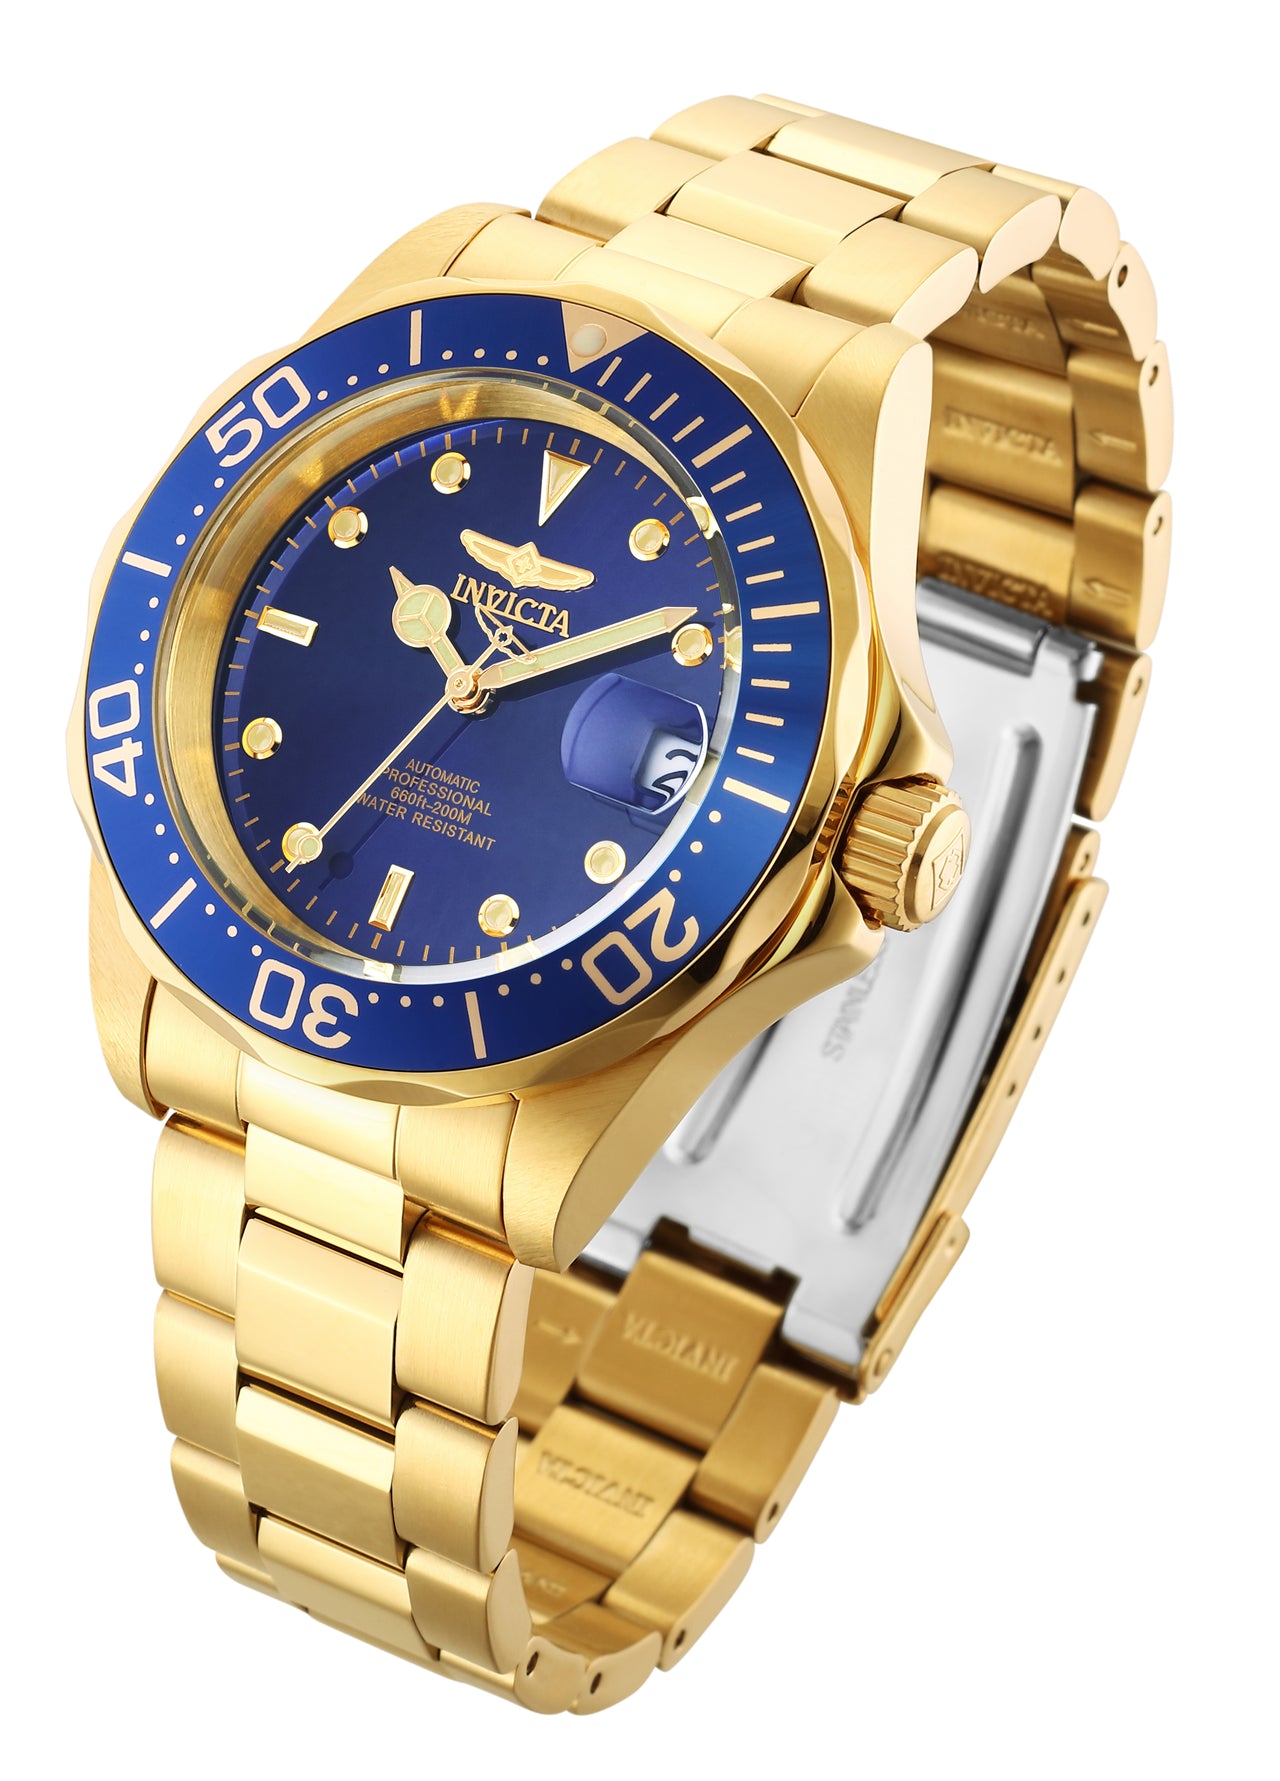 Invicta Men's 8930 Pro Diver Automatic 3 Hand Blue Dial Watch